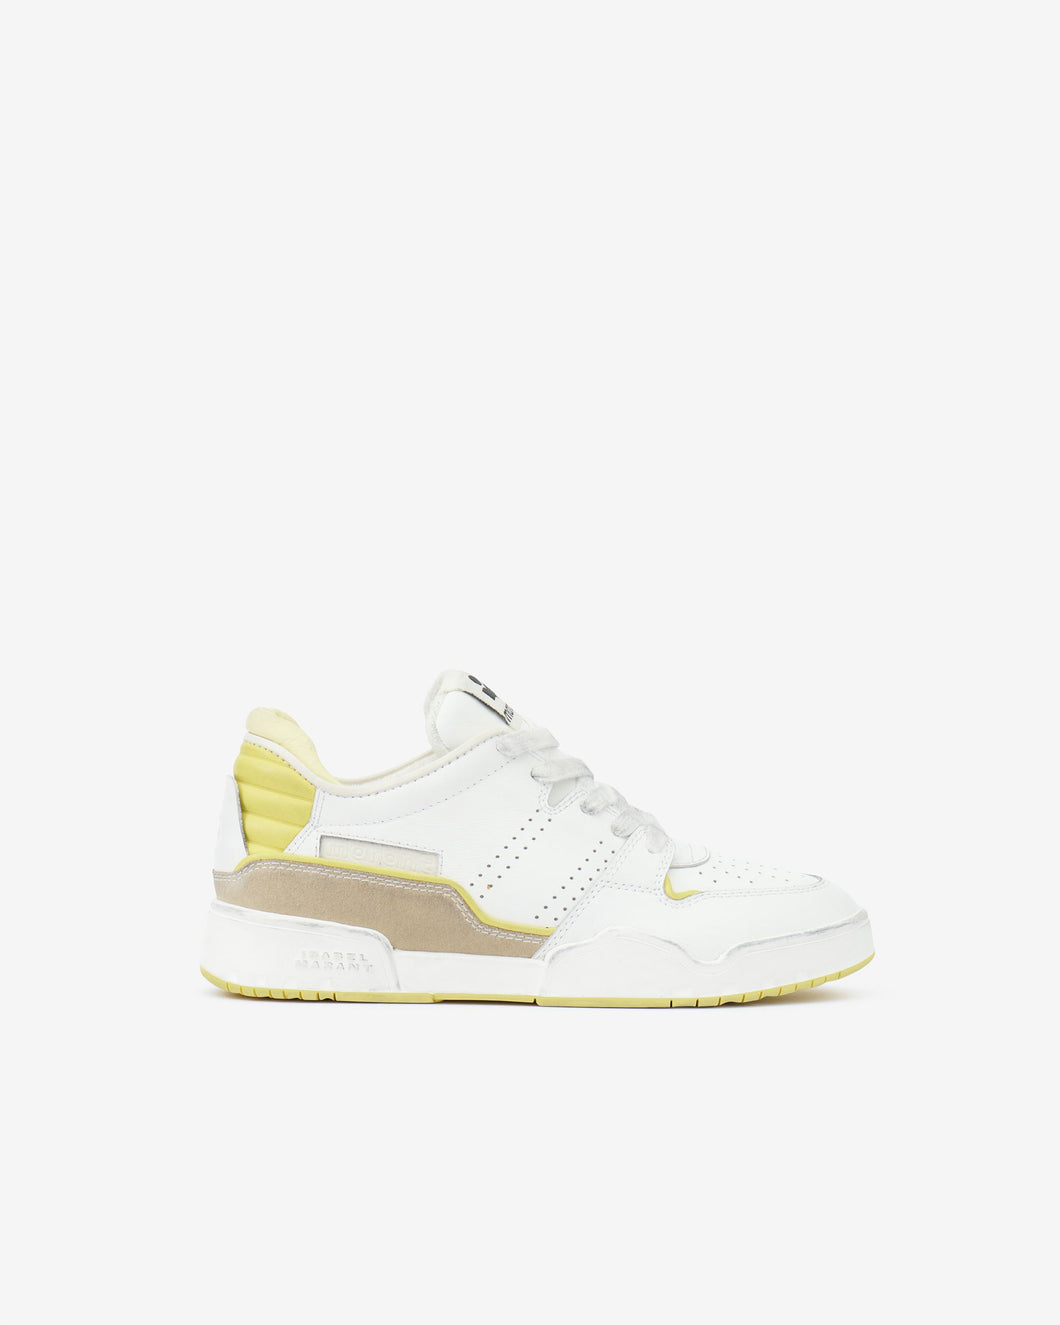 Emree Sneakers in light Yellow/Yellow